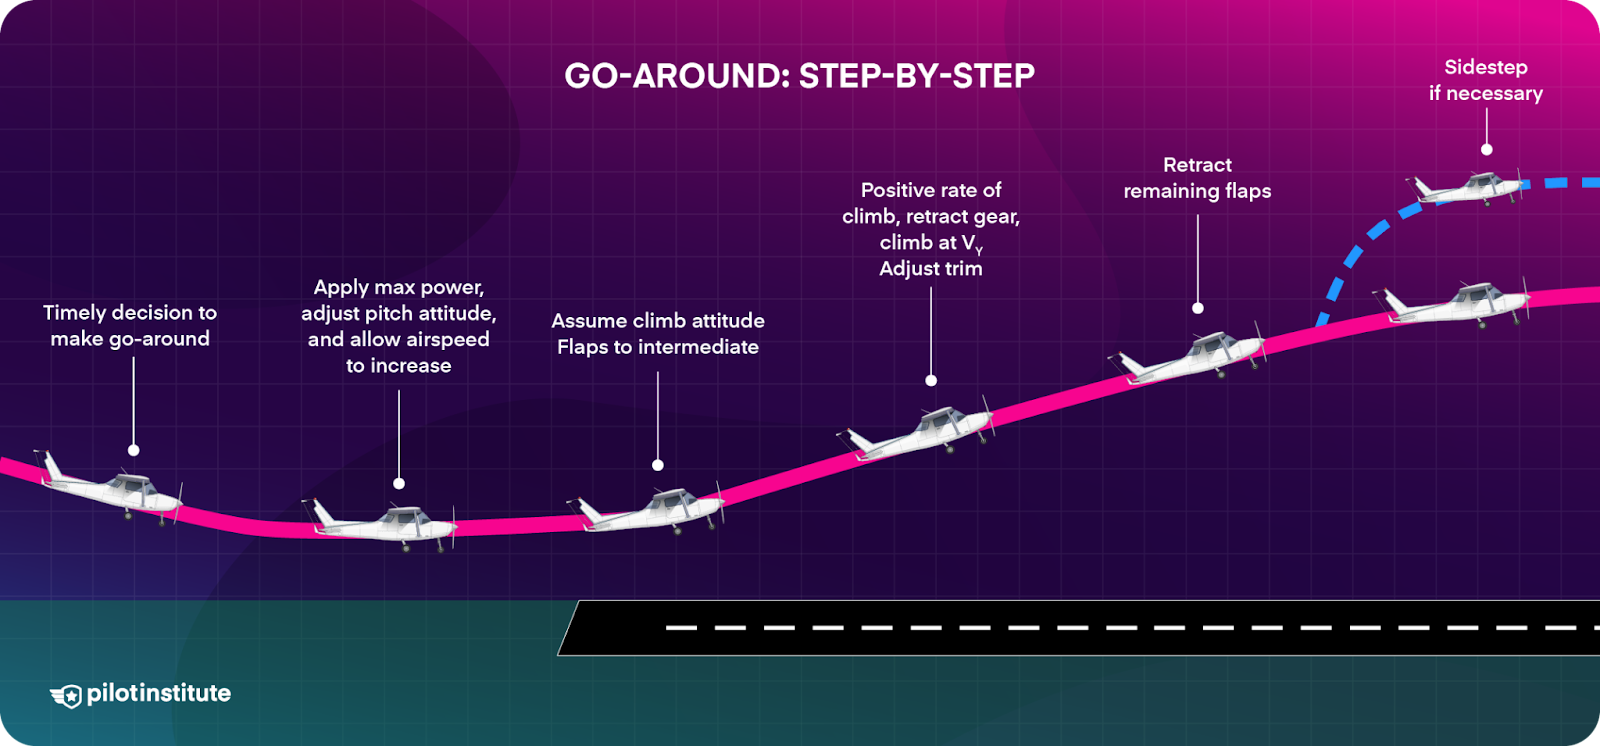 A step-by-step diagram of a go-around procedure.